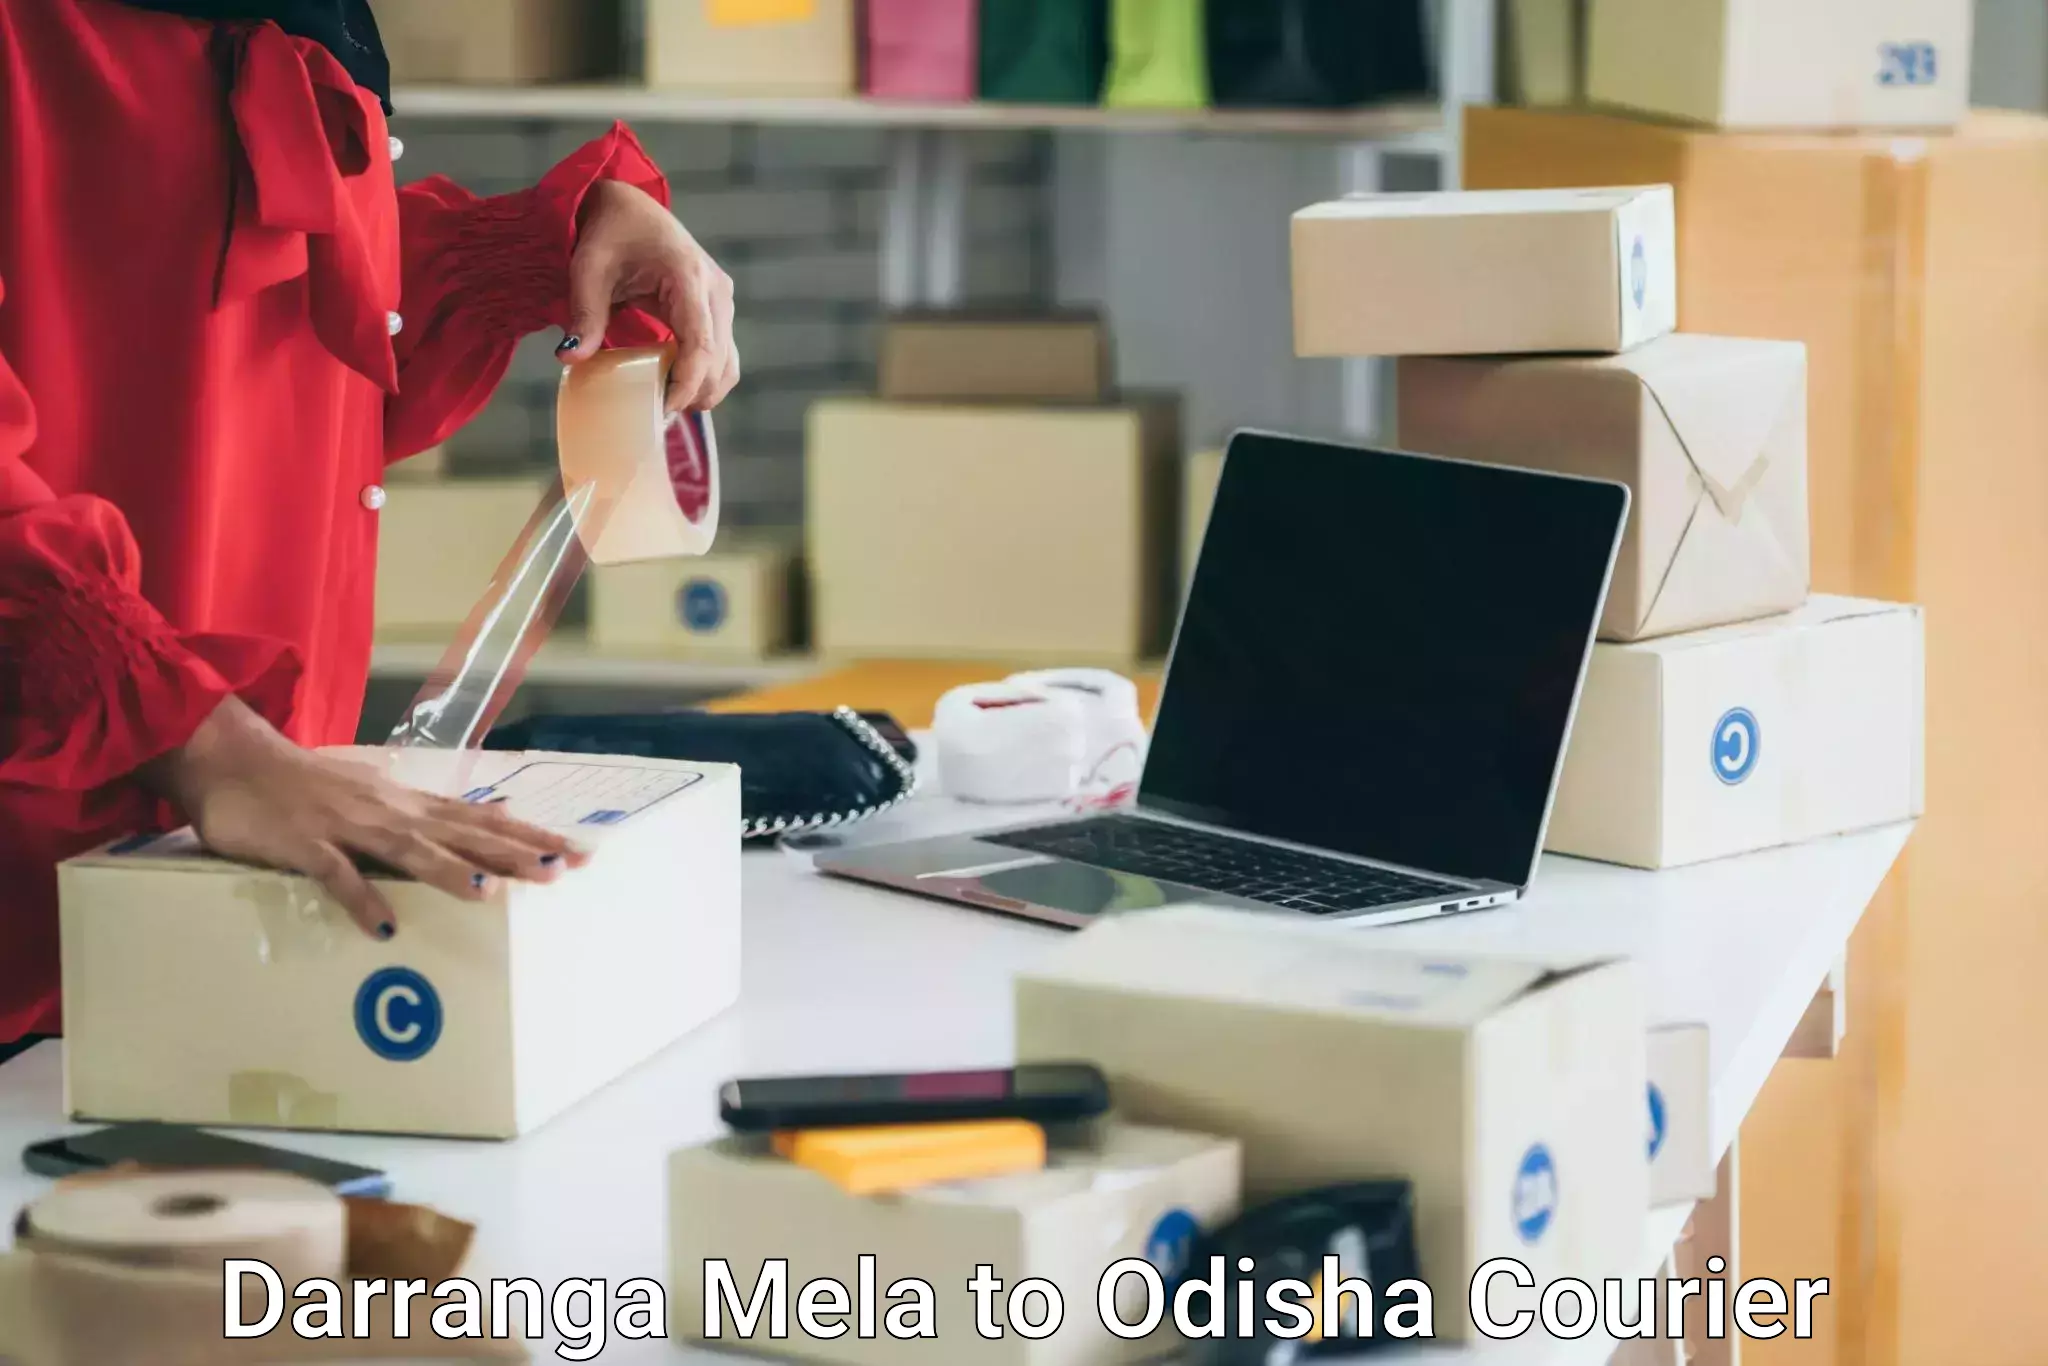 Quality moving company Darranga Mela to Tirtol